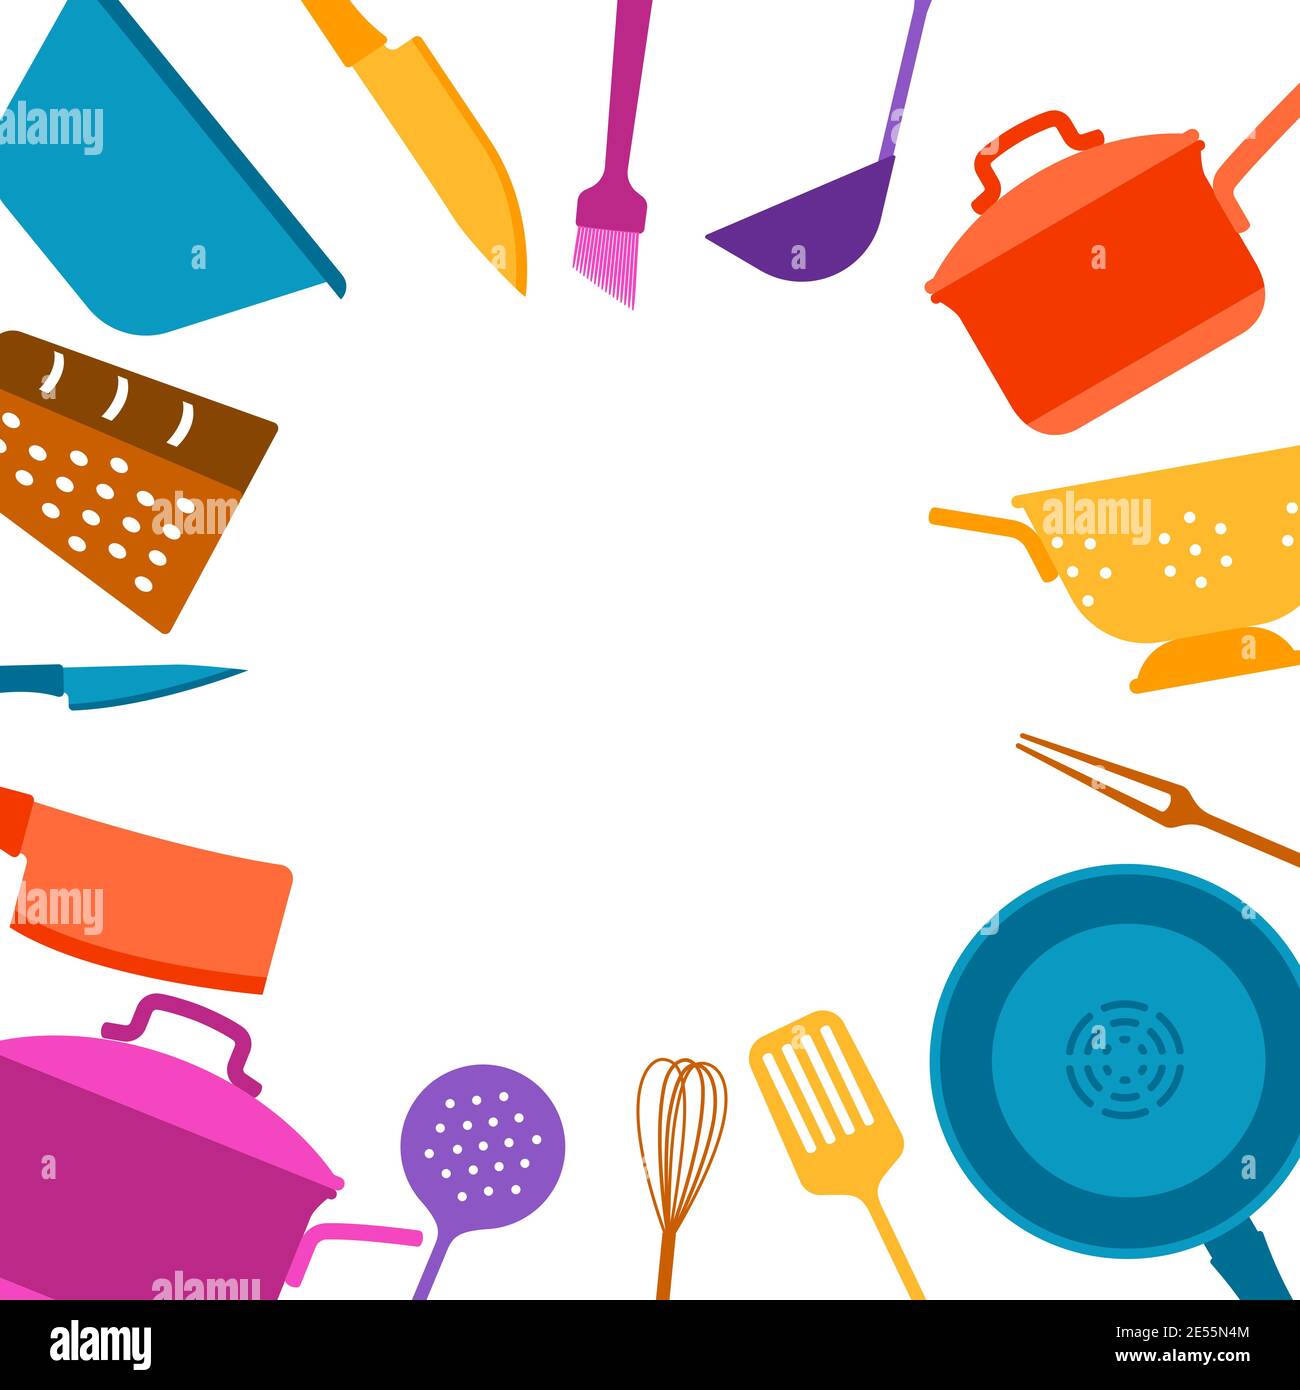 Background with kitchen utensils. Stock Vector